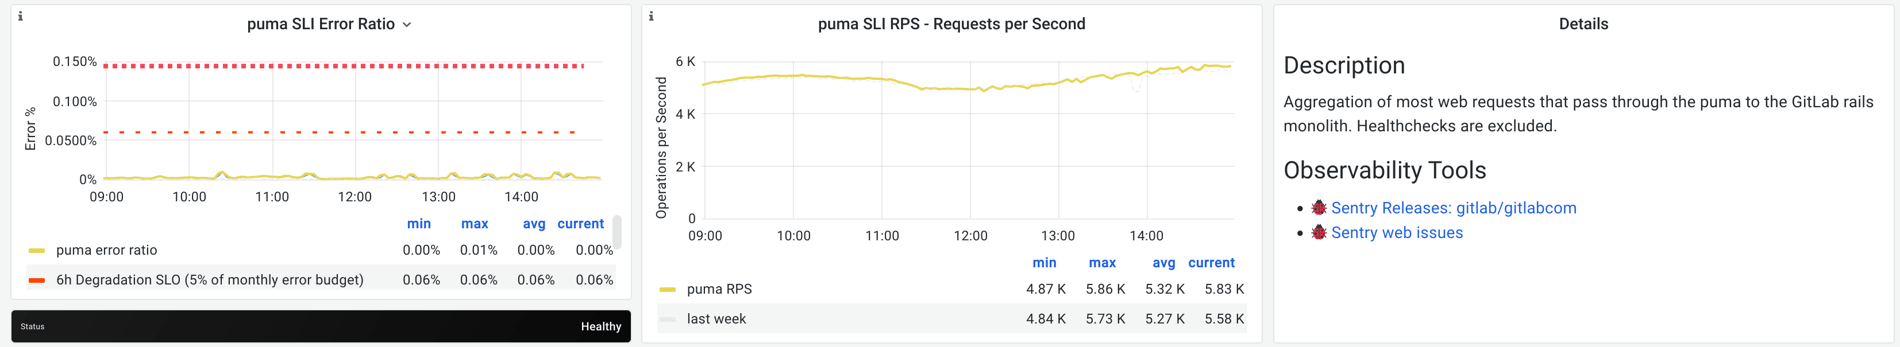 Puma SLI error rate and requests per second